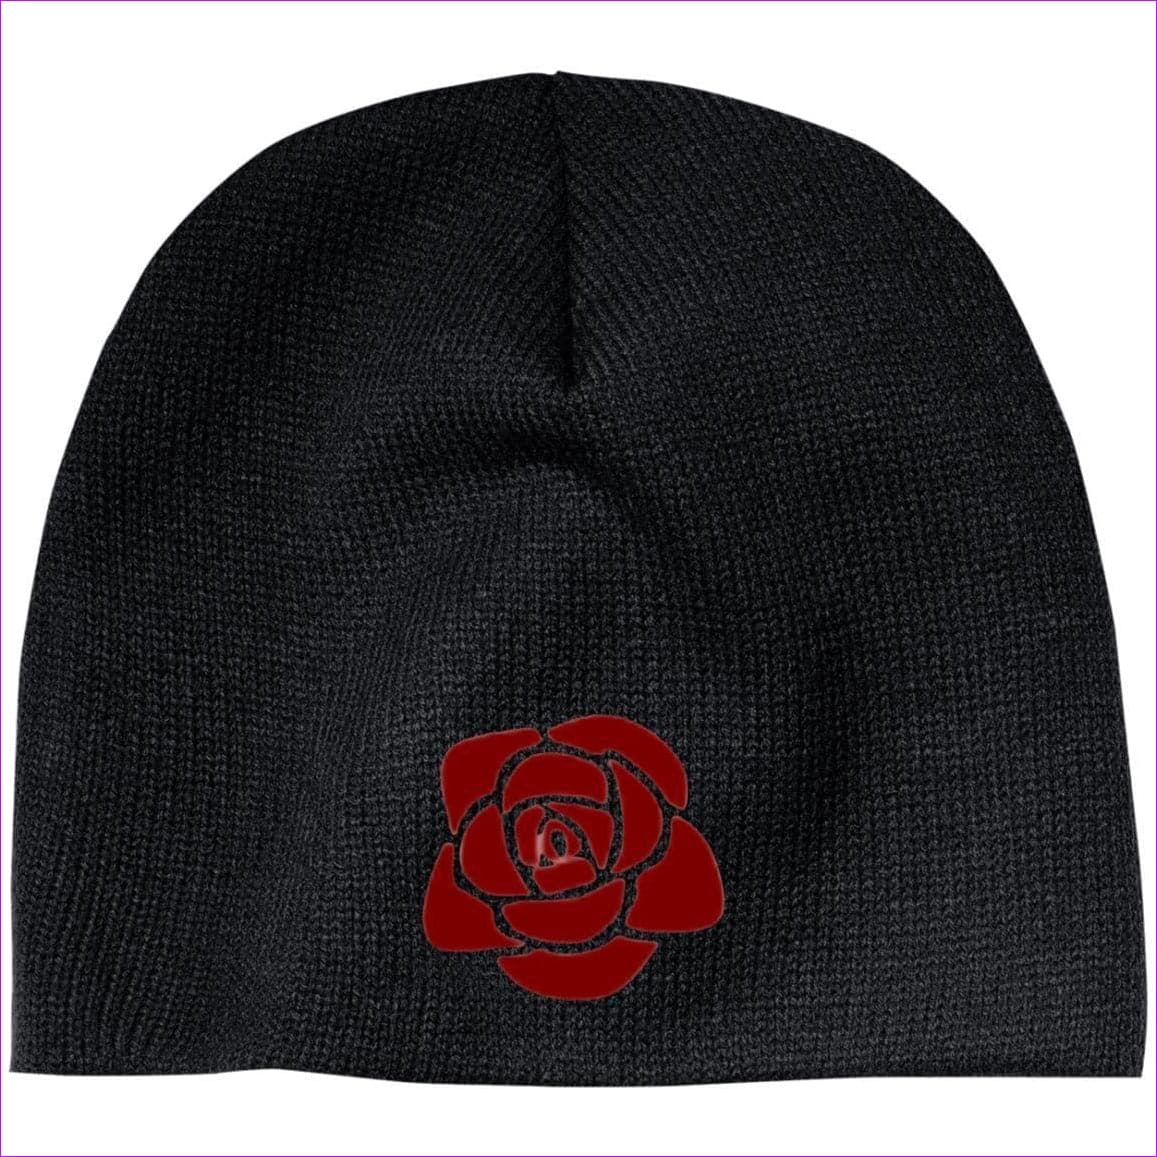 CP91 100% Acrylic Beanie Black One Size - Rose Embroidered Knit Cap, Cap, Beanie - Beanie at TFC&H Co.